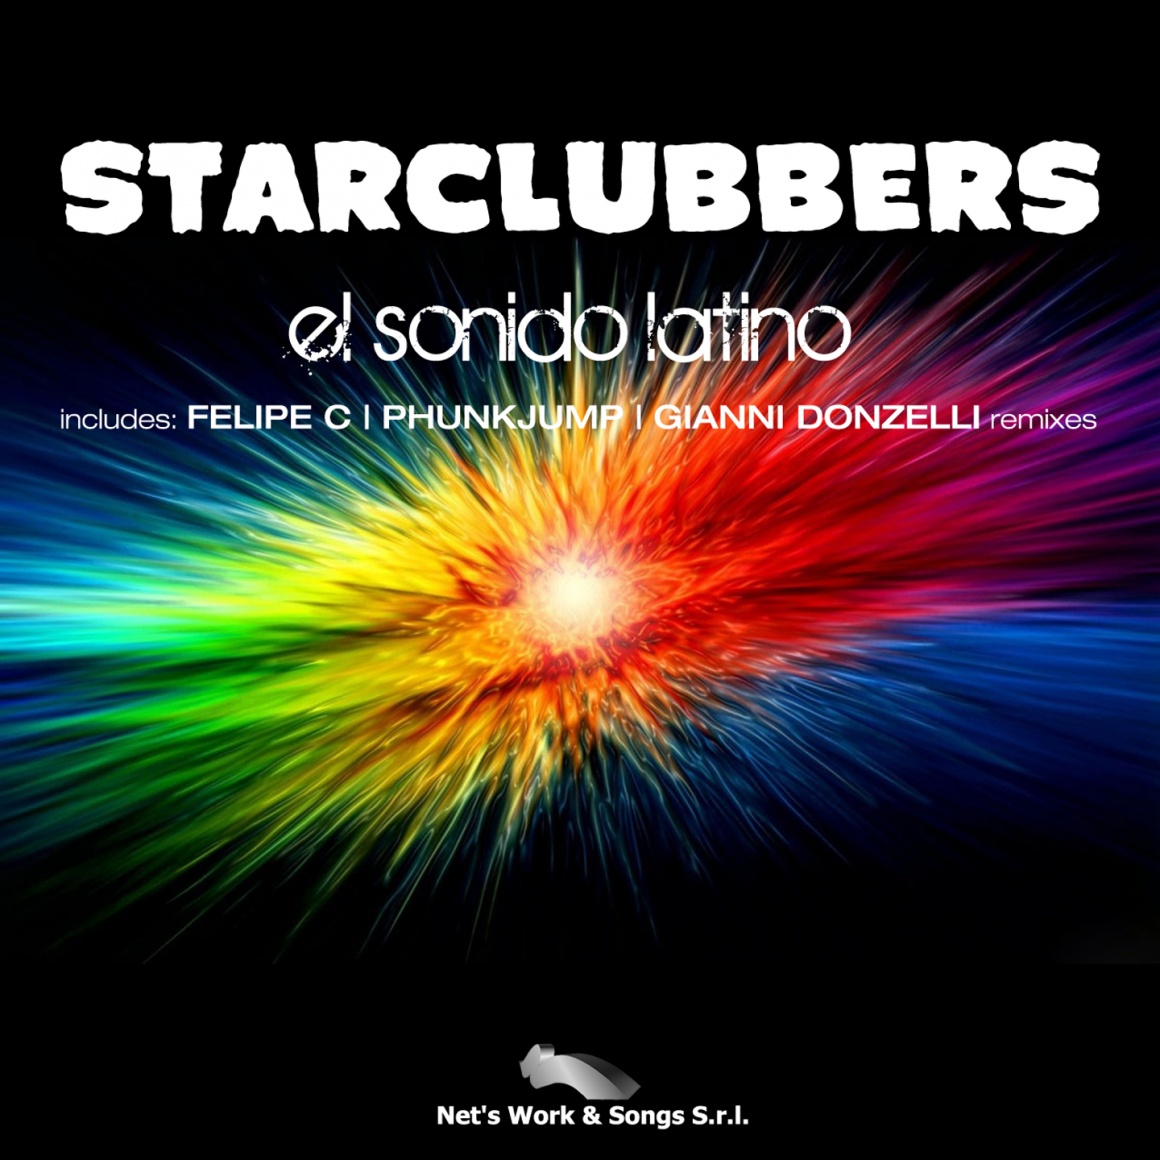 STARCLUBBERS “El Sonido Latino”